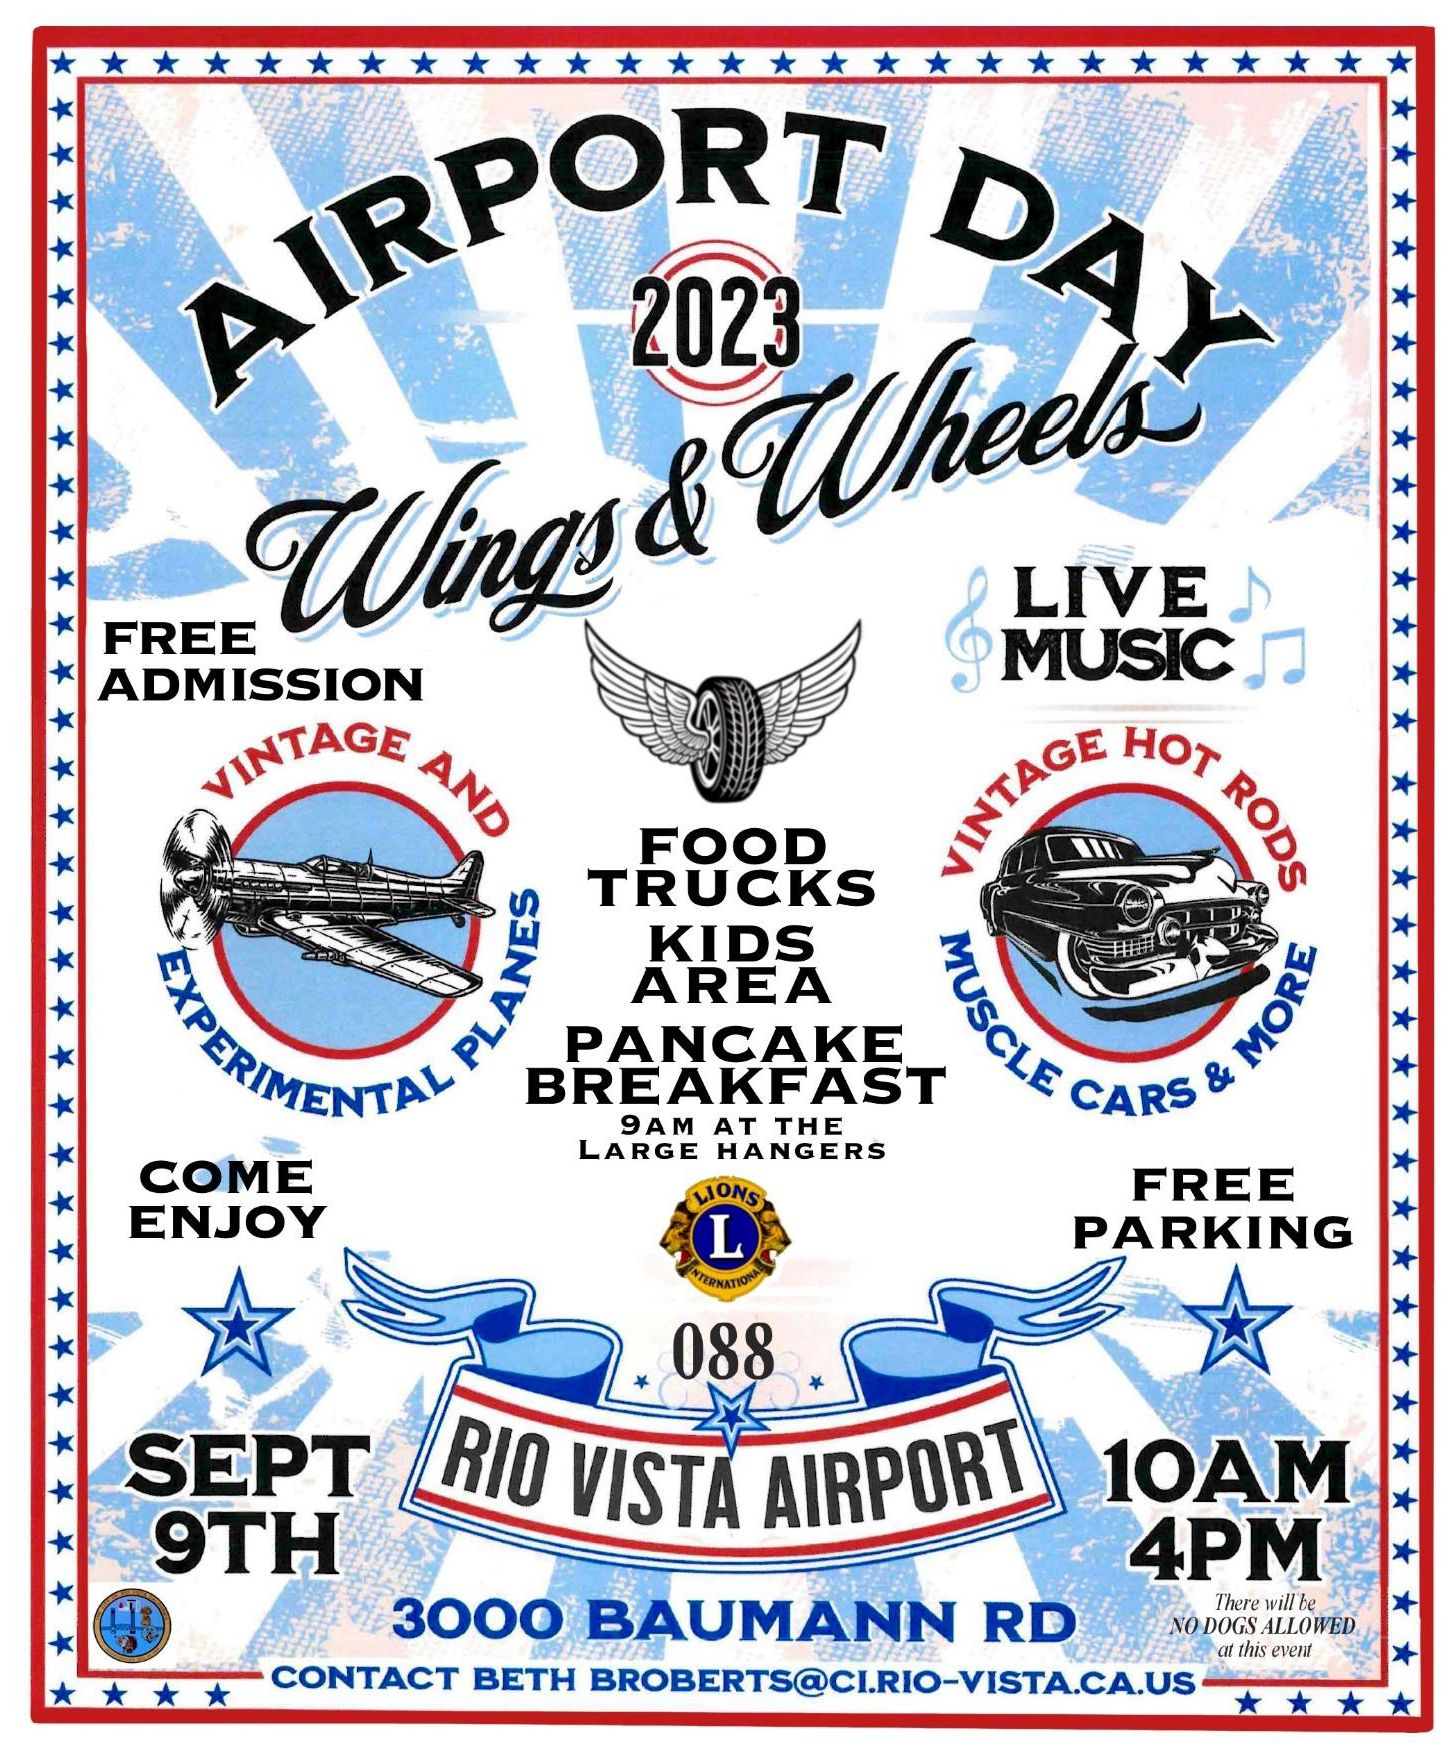 Rio Vista Airport Day - Wings & Wheels